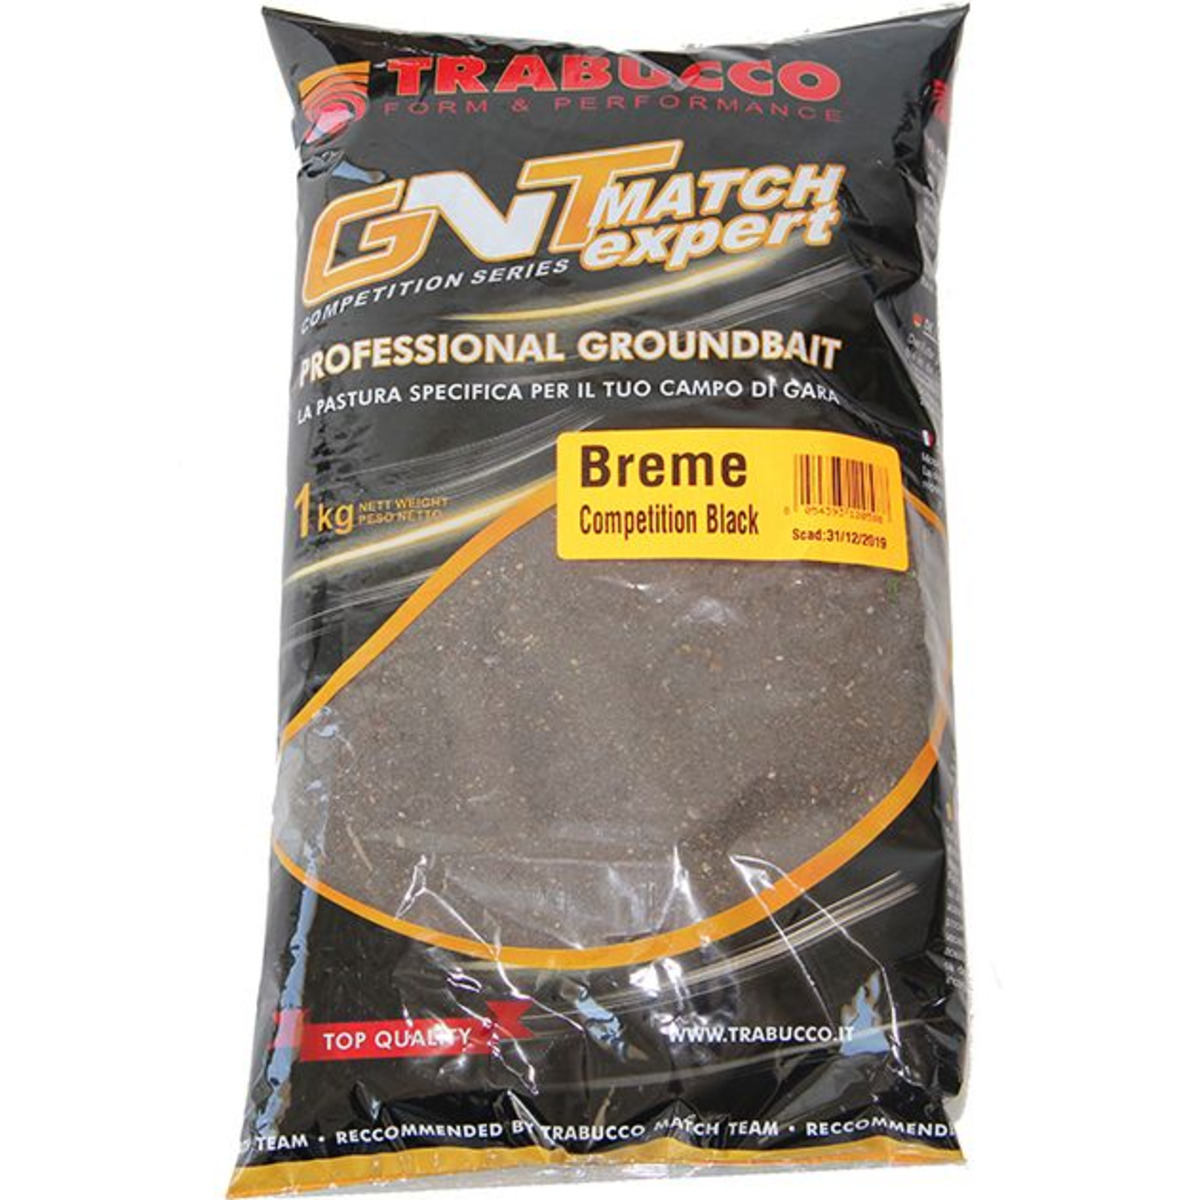 Trabucco GNT Match Expert Breme Cometition - Breme Competition Black - 1 kg